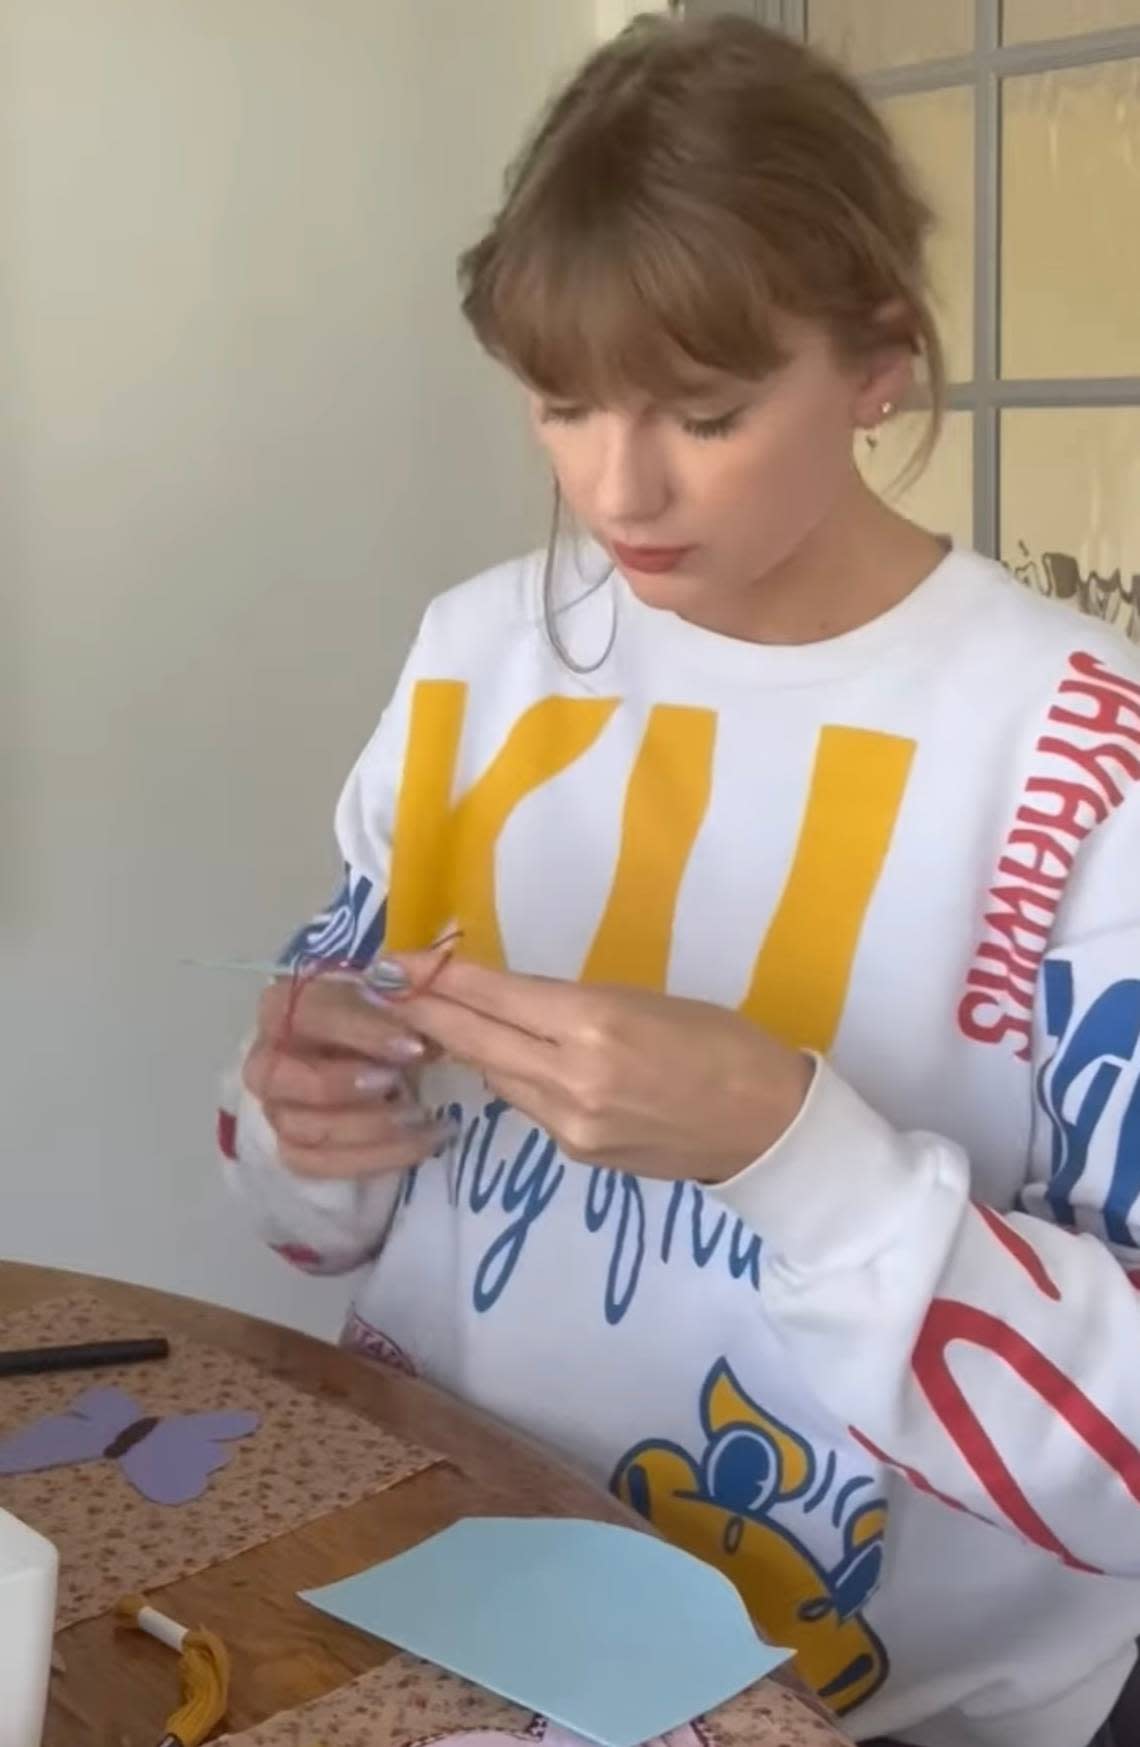 Taylor Swift wore Kansas Jayhawks sweatshirt in viral video. It’s for